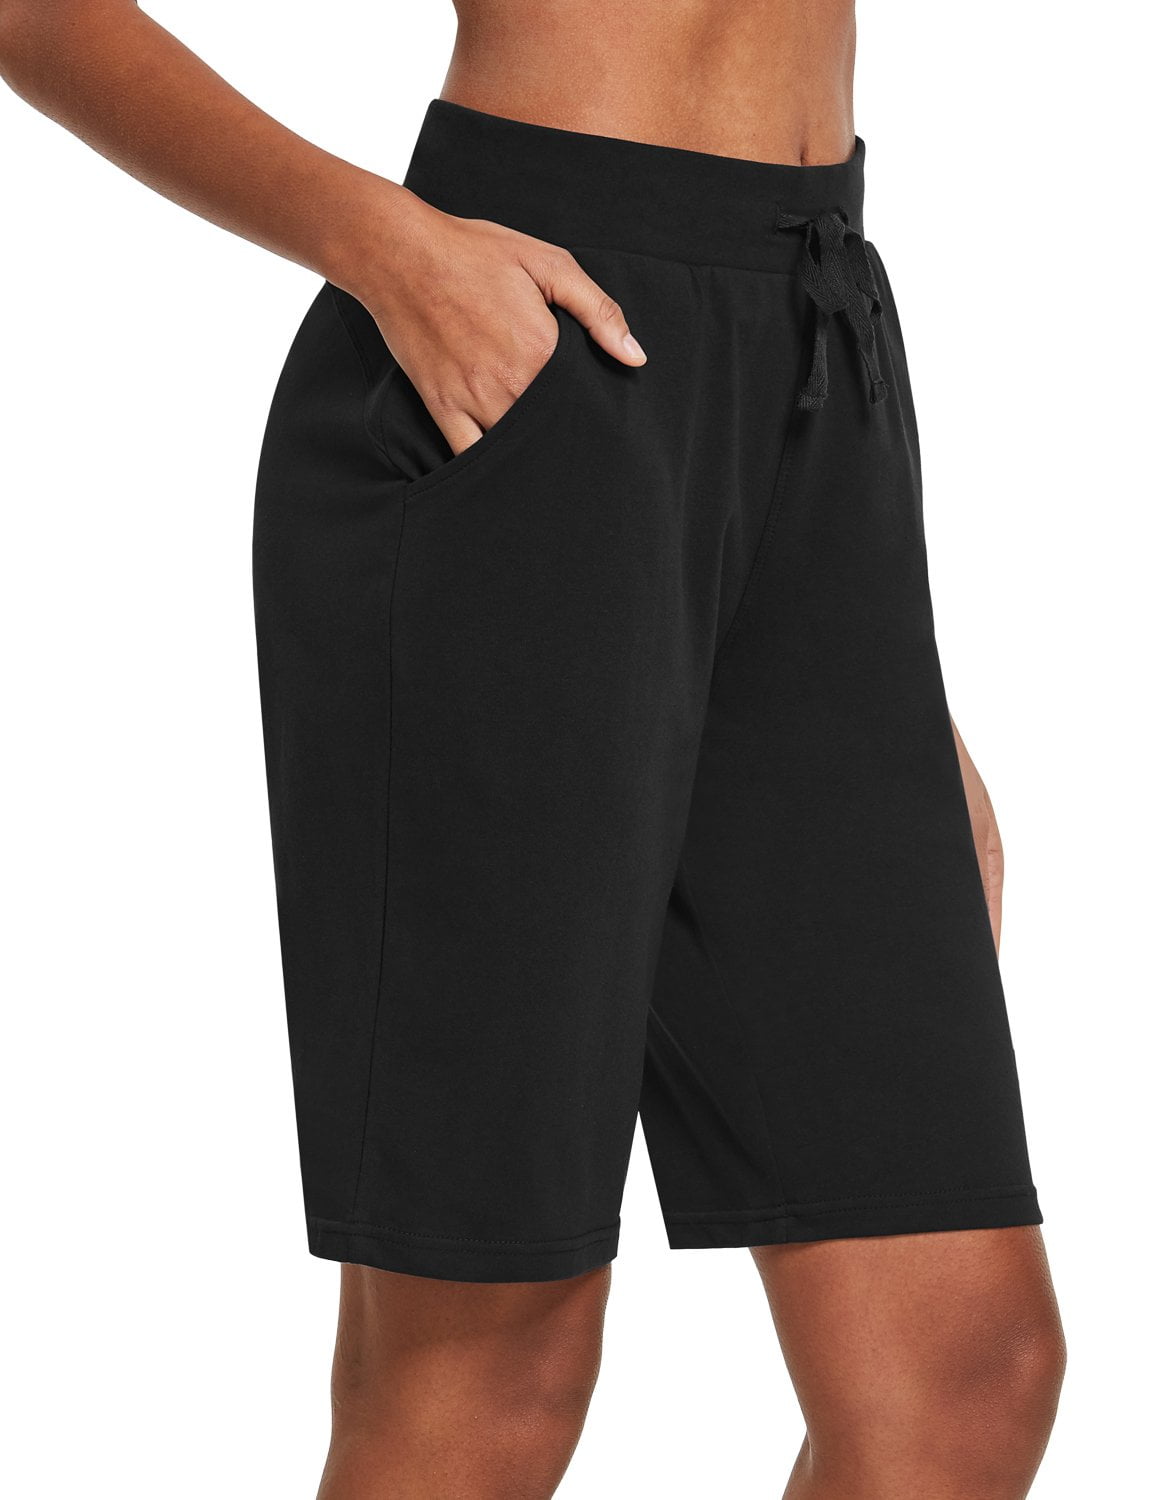 BALEAF Women's Bermuda Shorts Cotton Long Shorts with Pockets Black XS 